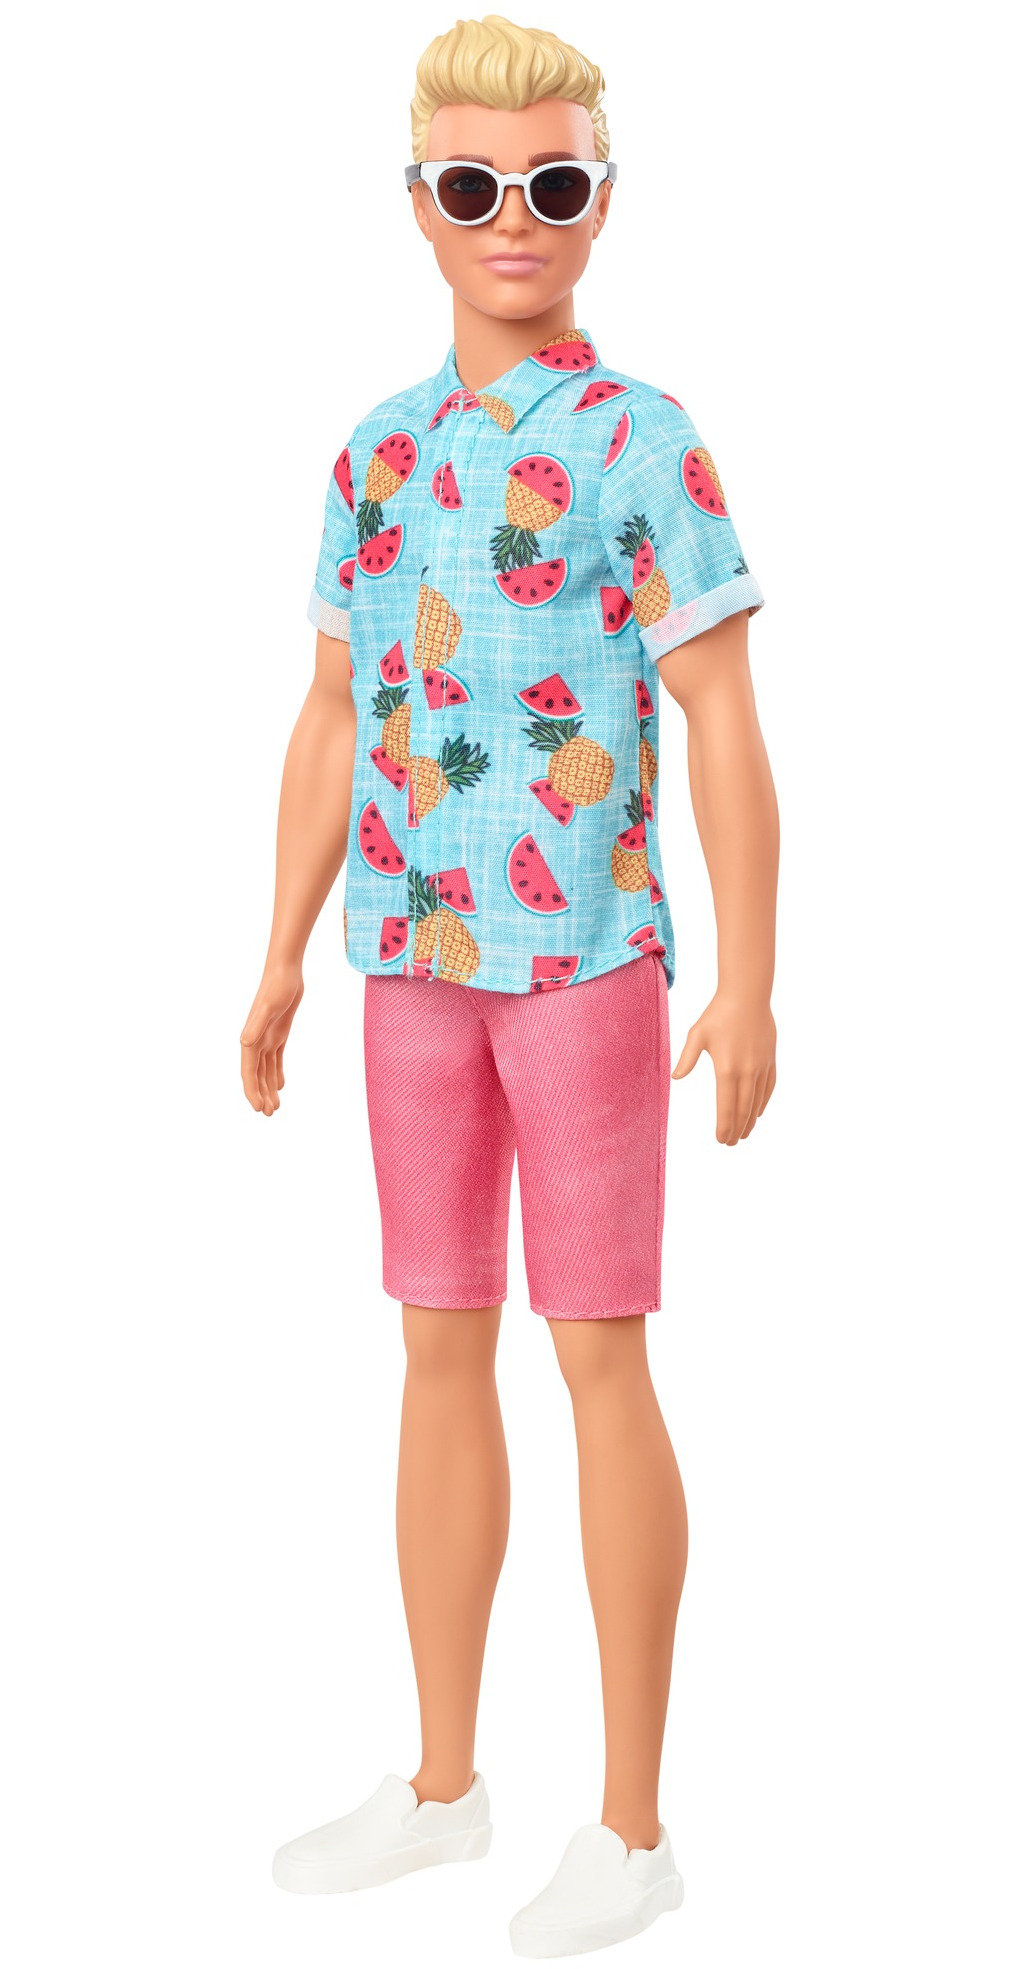 Barbie Ken Fashionistas Doll #152, Sculpted Blonde Hair & Tropical Print Shirt - image 1 of 7